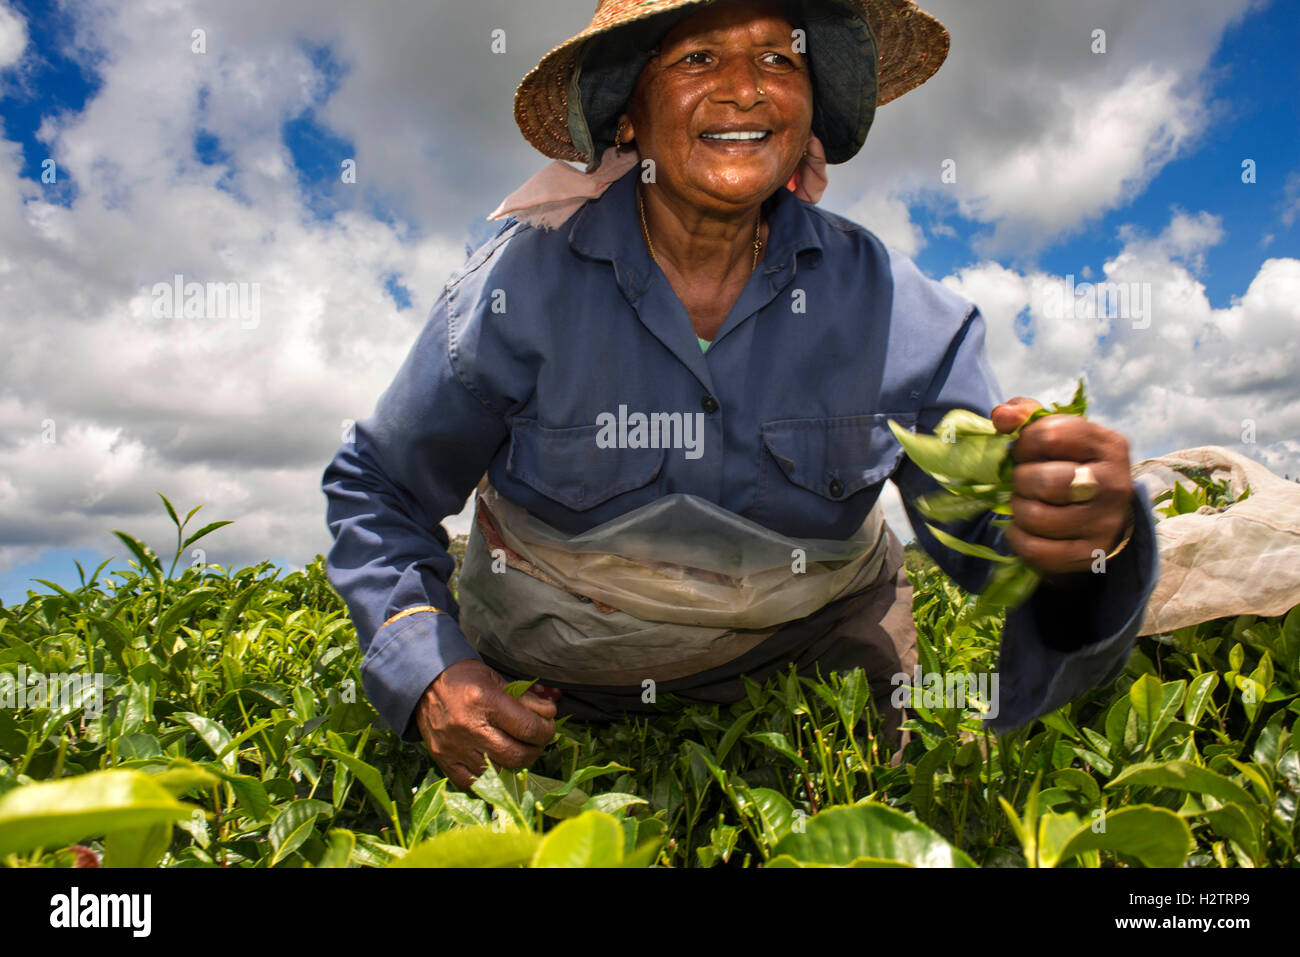 Woman harvesting tea, tea plants, tea plantation, Bois Chéri Tea Factory, Mauritius, Africa Stock Photo